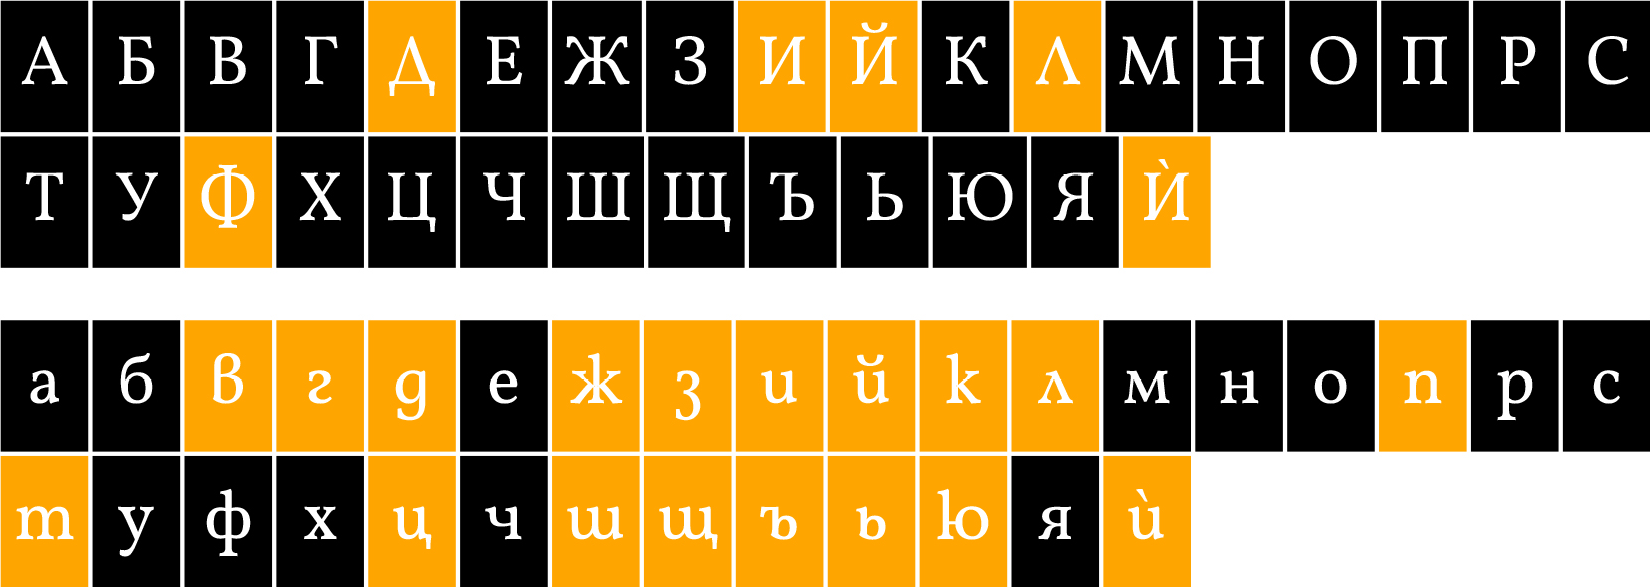 cyrillic-alphabets-of-slavic-languages